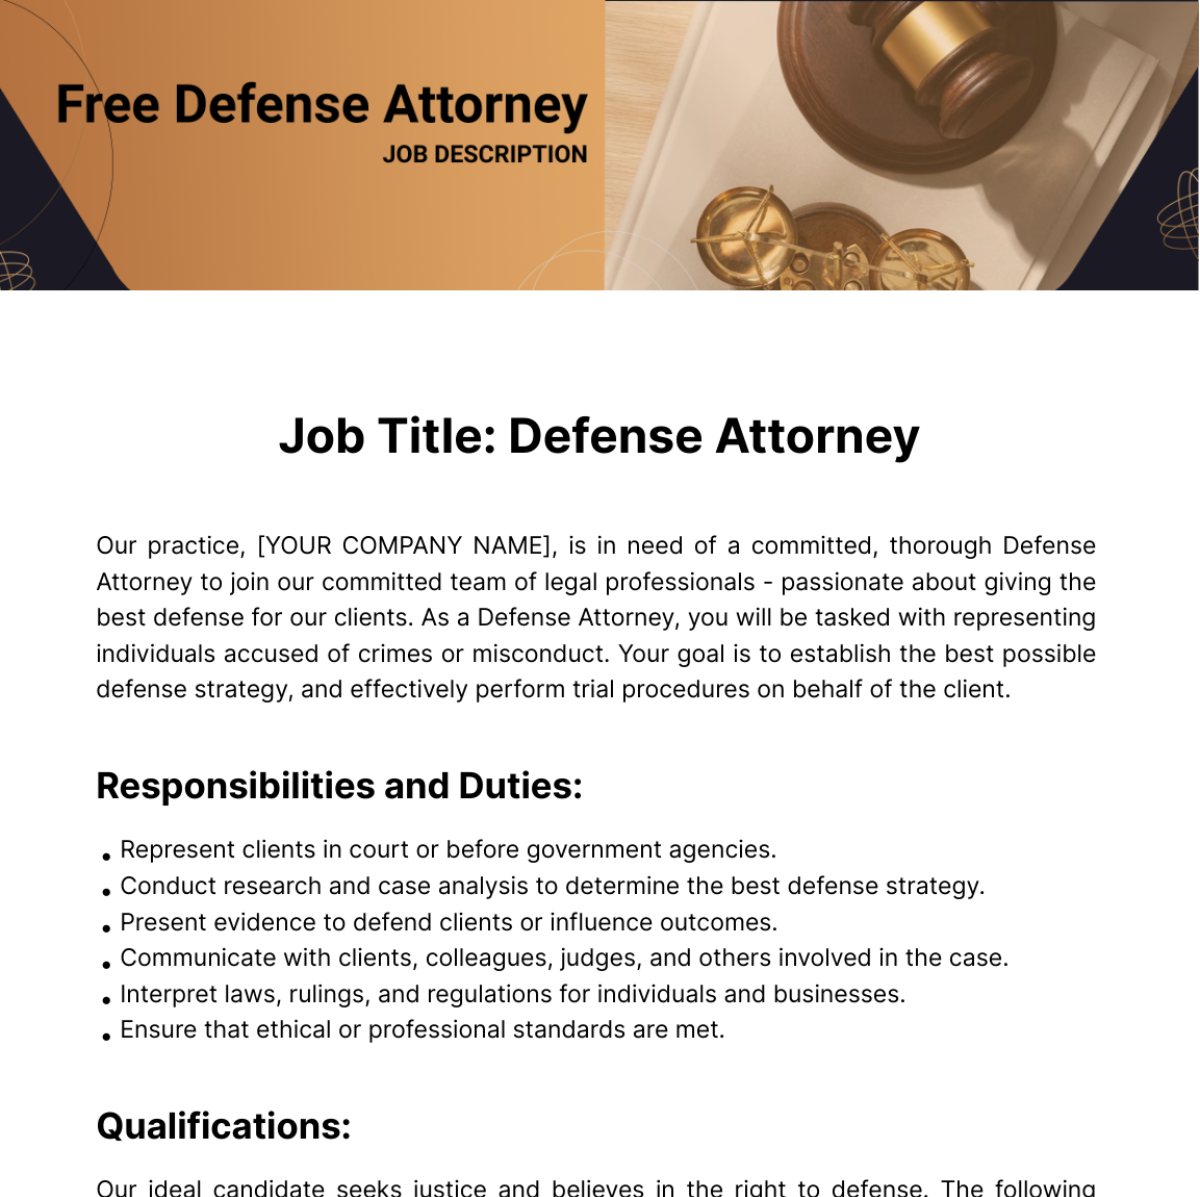 Free Defense Attorney Job Description Template